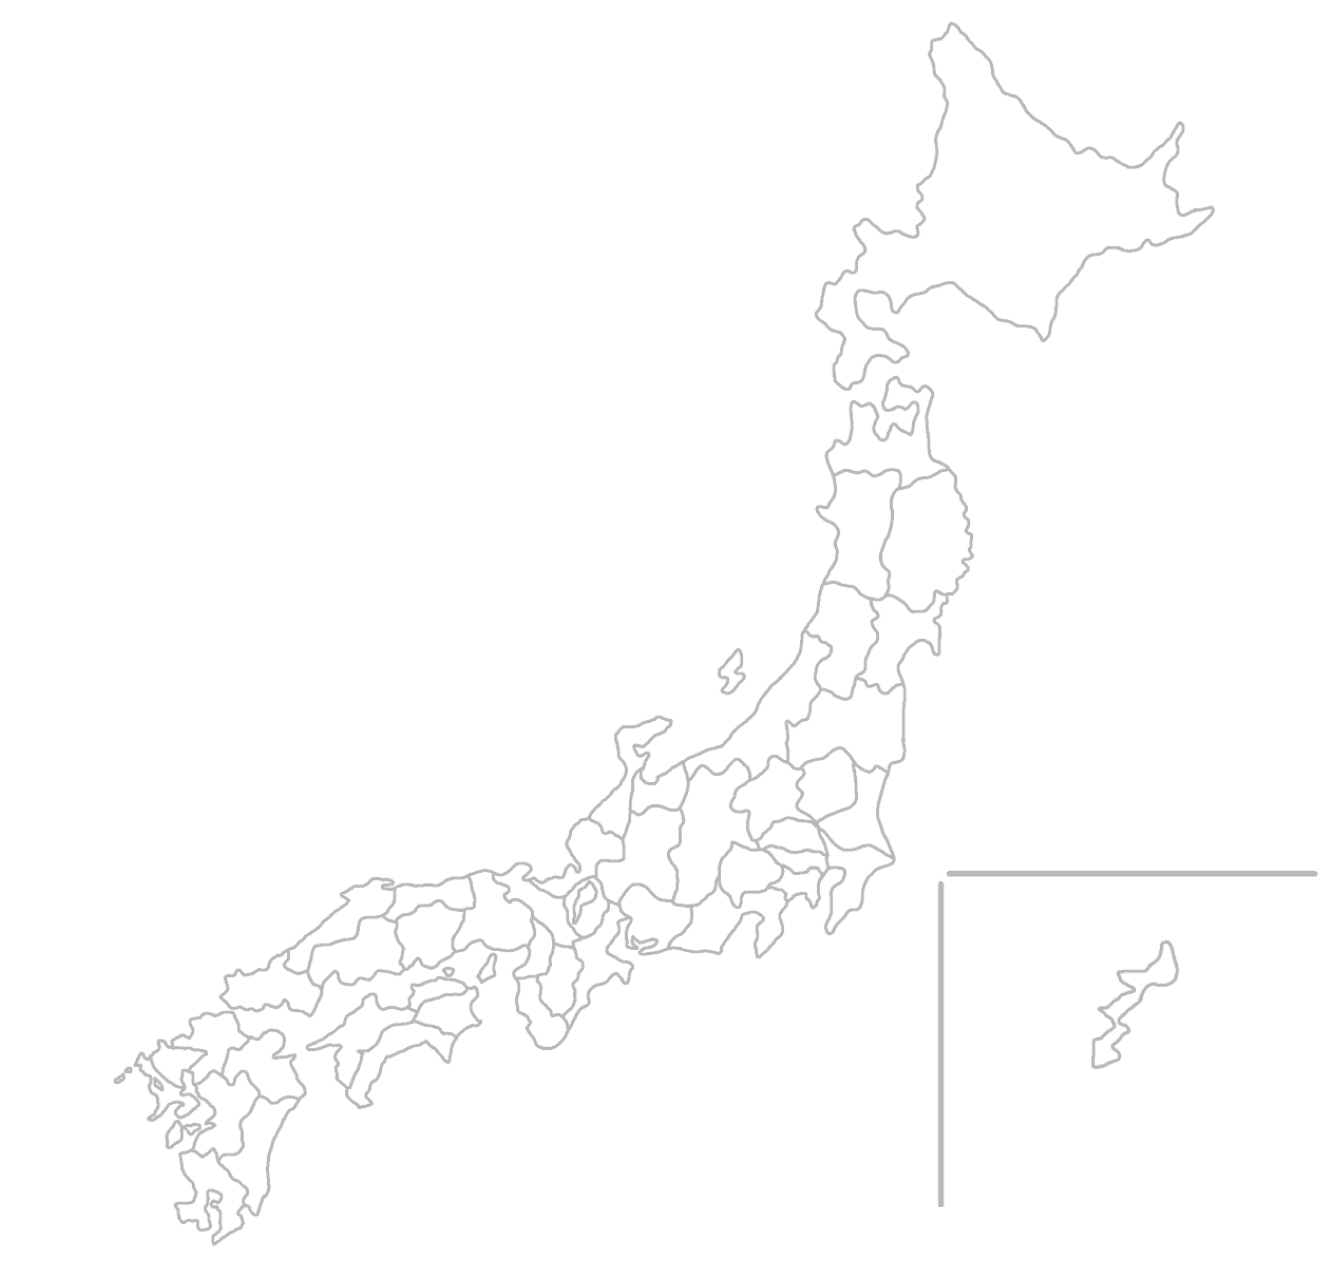 Dot Homesの施設の位置がわかる日本地図